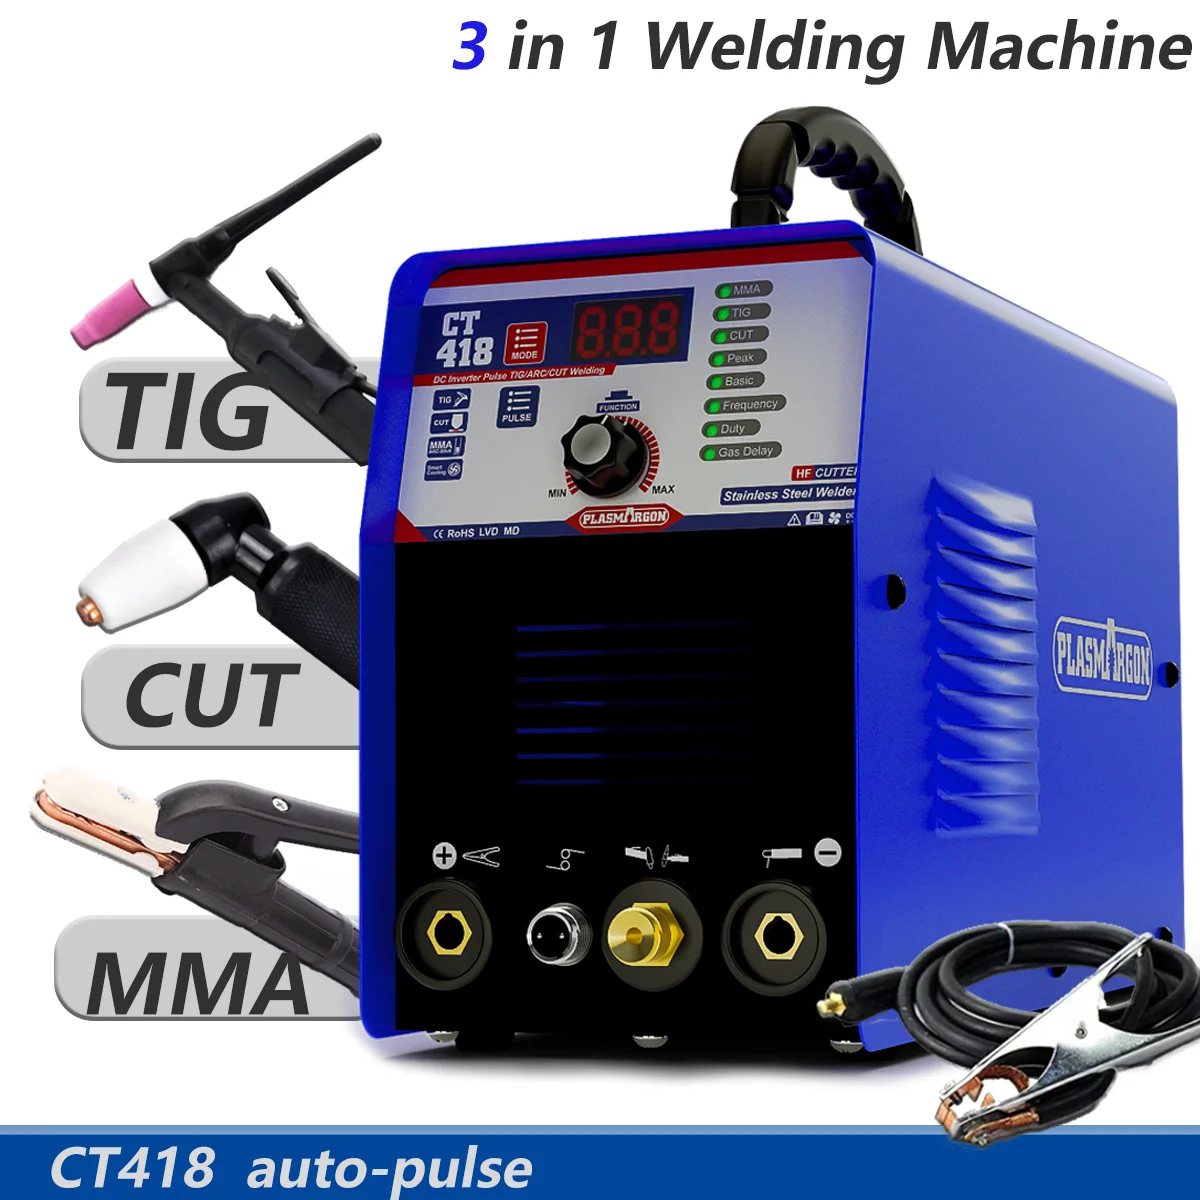 

Plasmargon 4 in1 Welding Machine CT418 TIG CUT MMA PULSE DC Inverter Welder 220V IGBT I Tig Welding Plasma Cutter for Metal